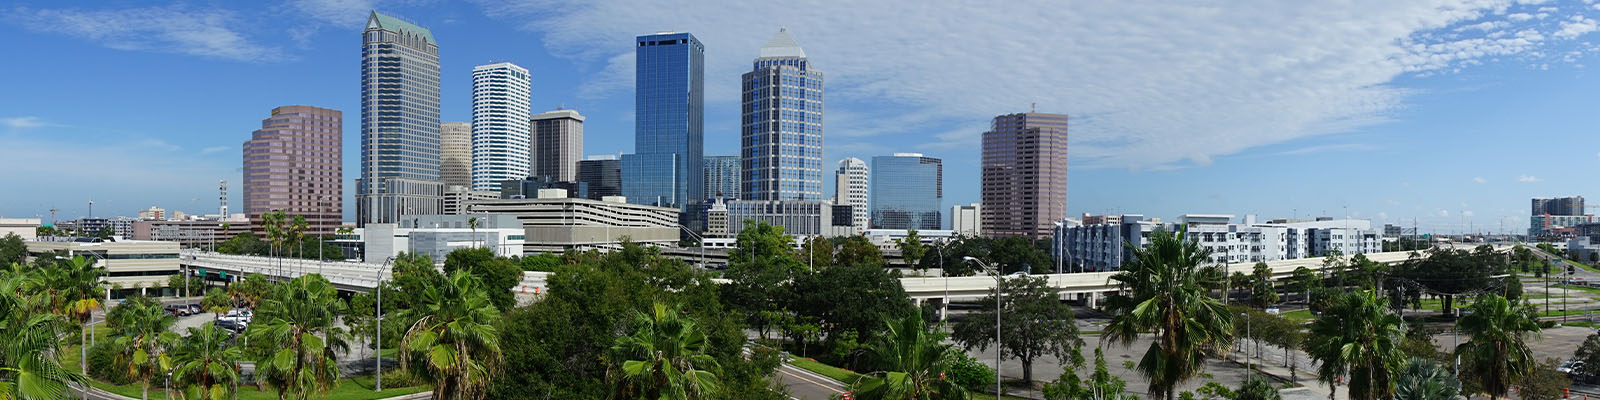 Find Pest Control in Tampa